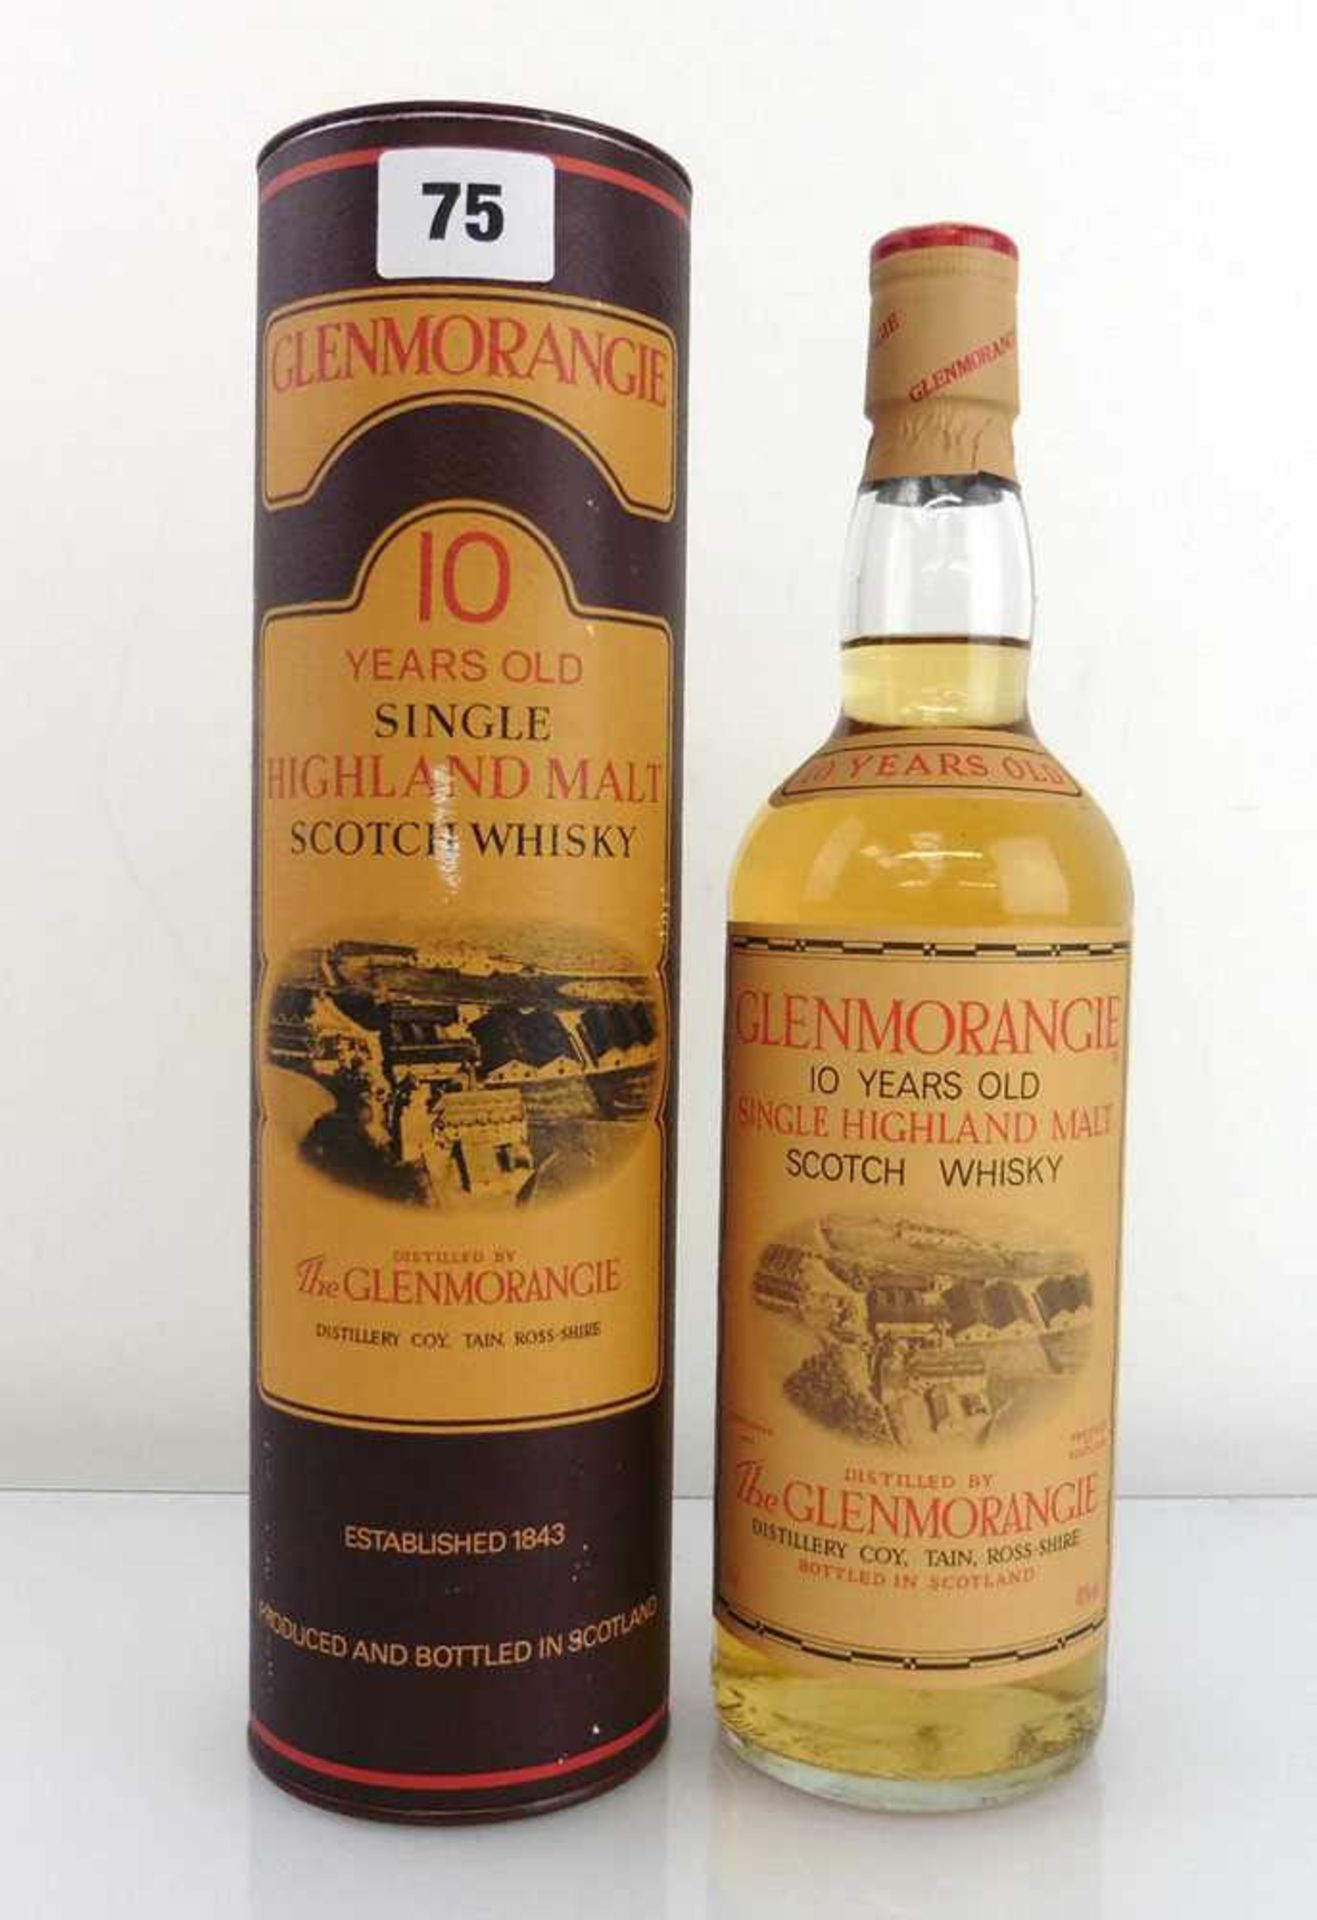 An old style bottle of Glenmorangie 10 year old Single Highland Malt Scotch Whisky with carton circa